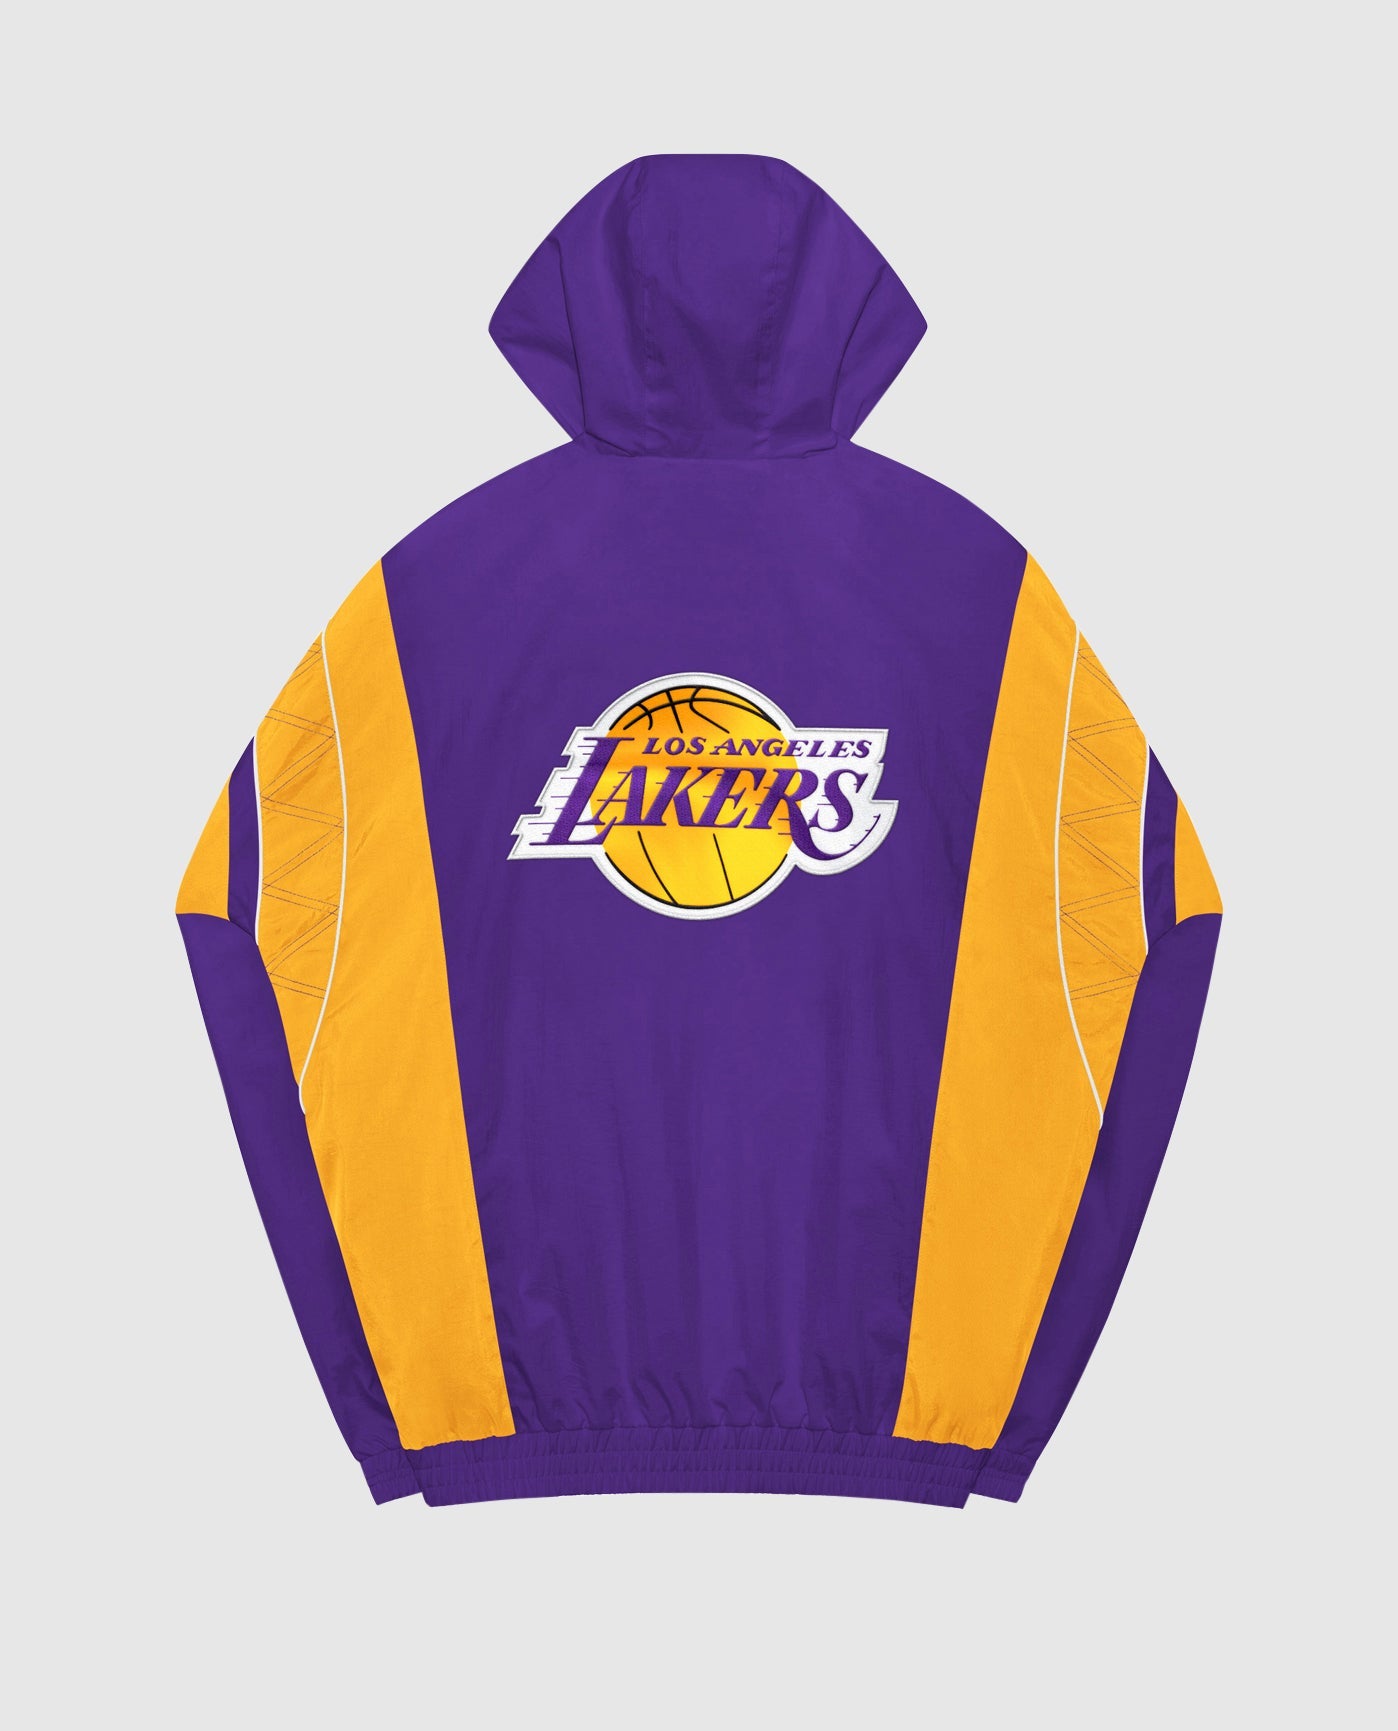 Nike / Men's Los Angeles Lakers Yellow Jacket